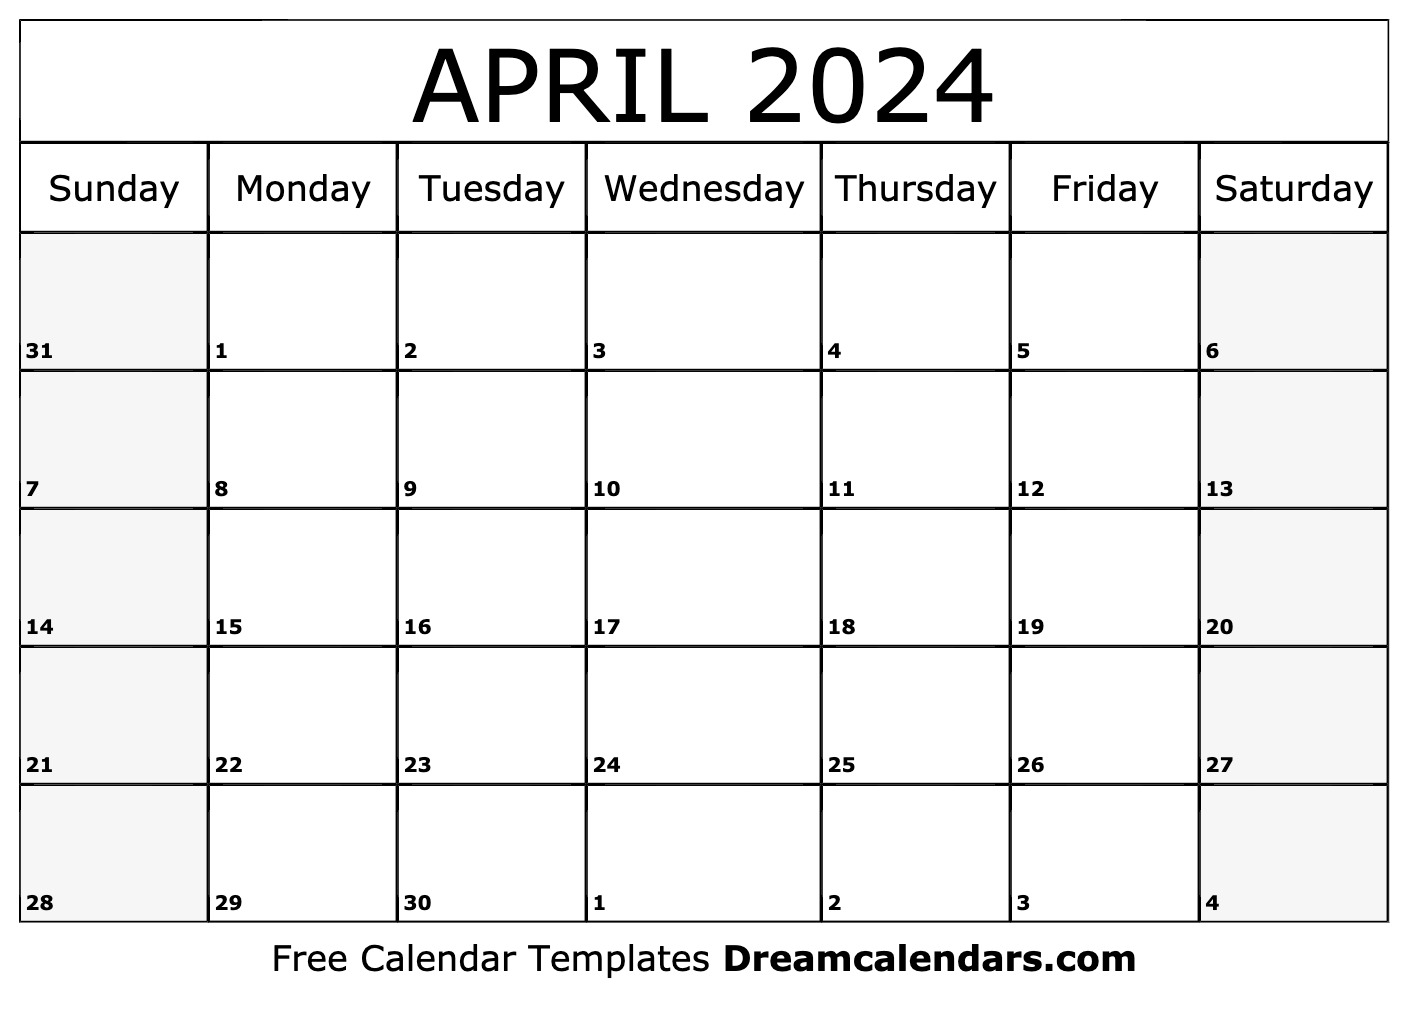 april-2024-calendar-free-blank-printable-with-holidays